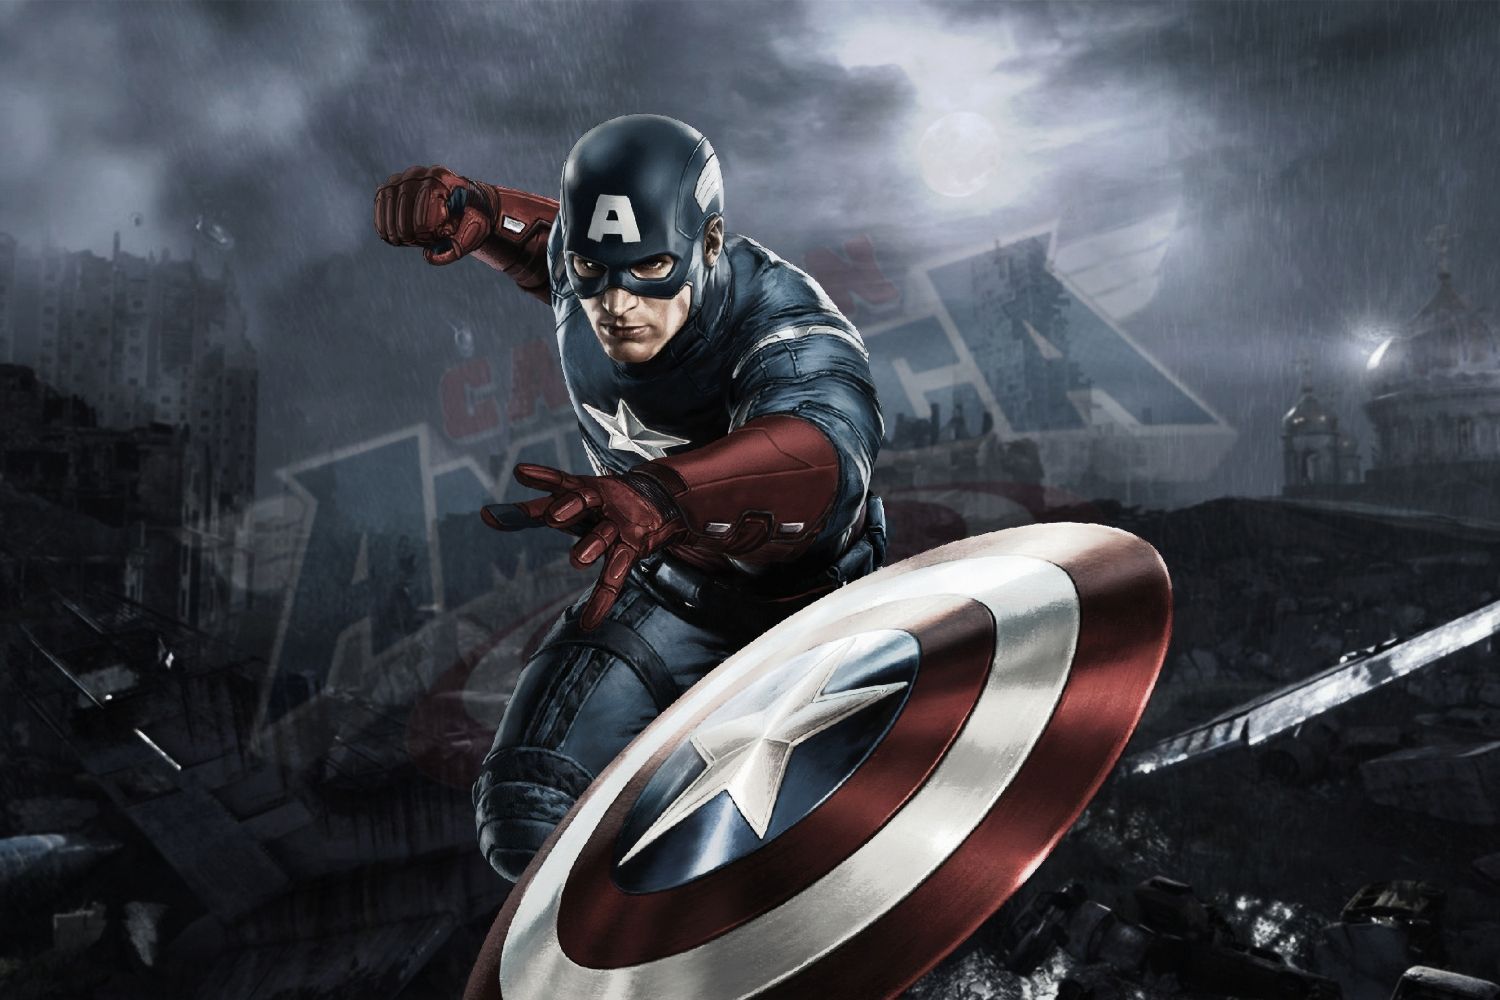 Постер "Капитан Америка" от Интернет магазина Милота